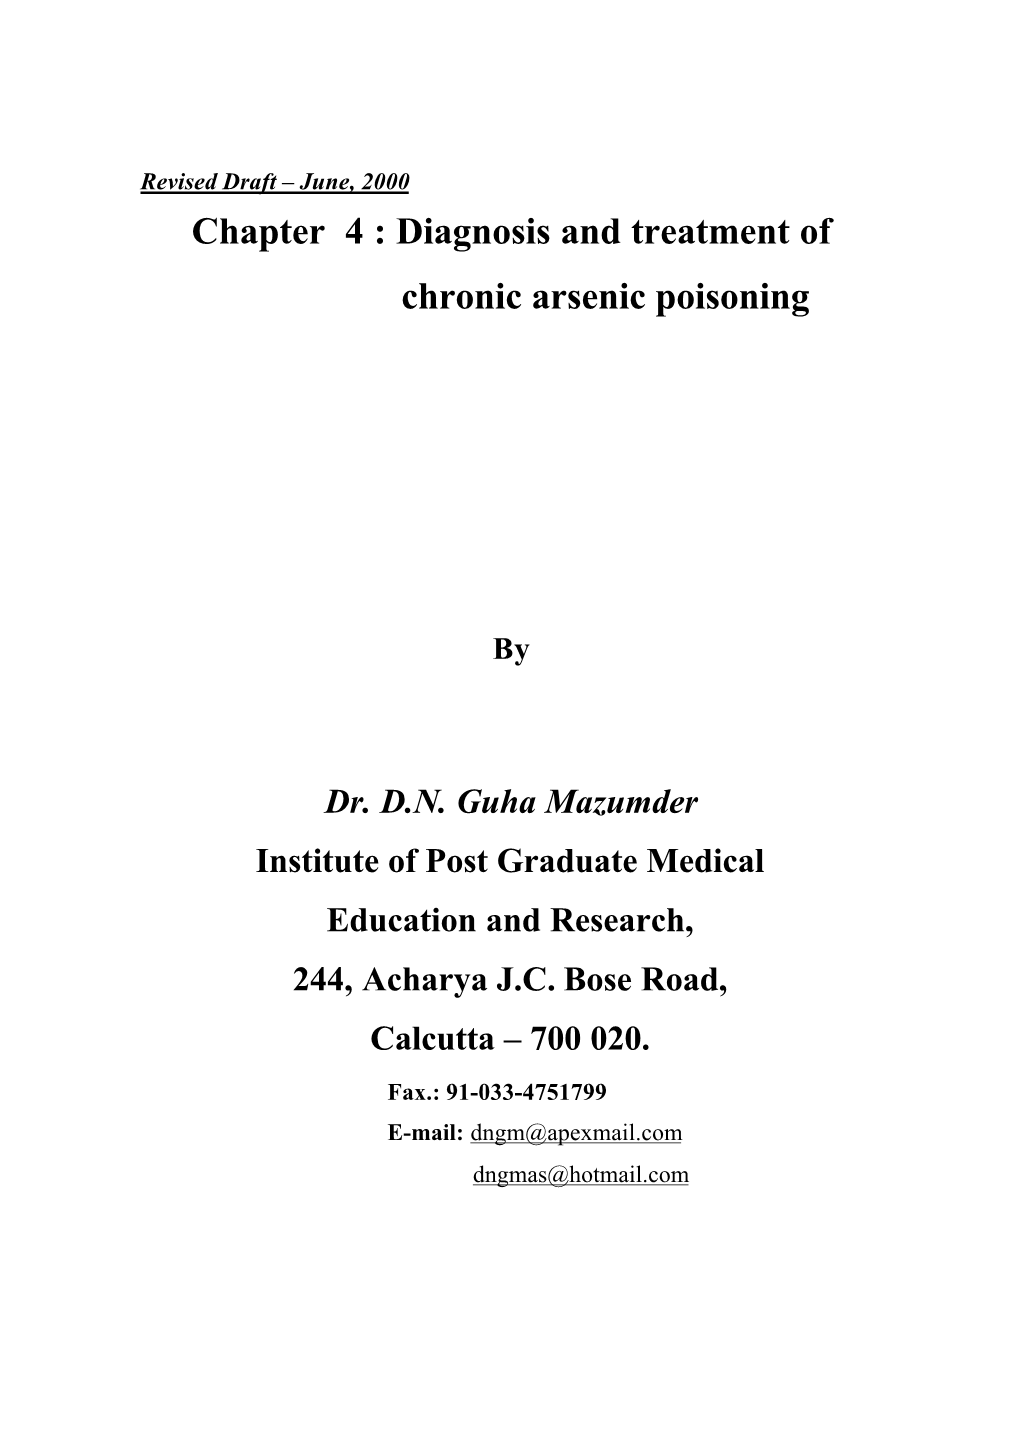 Diagnosis and Treatment of Chronic Arsenic Poisoning